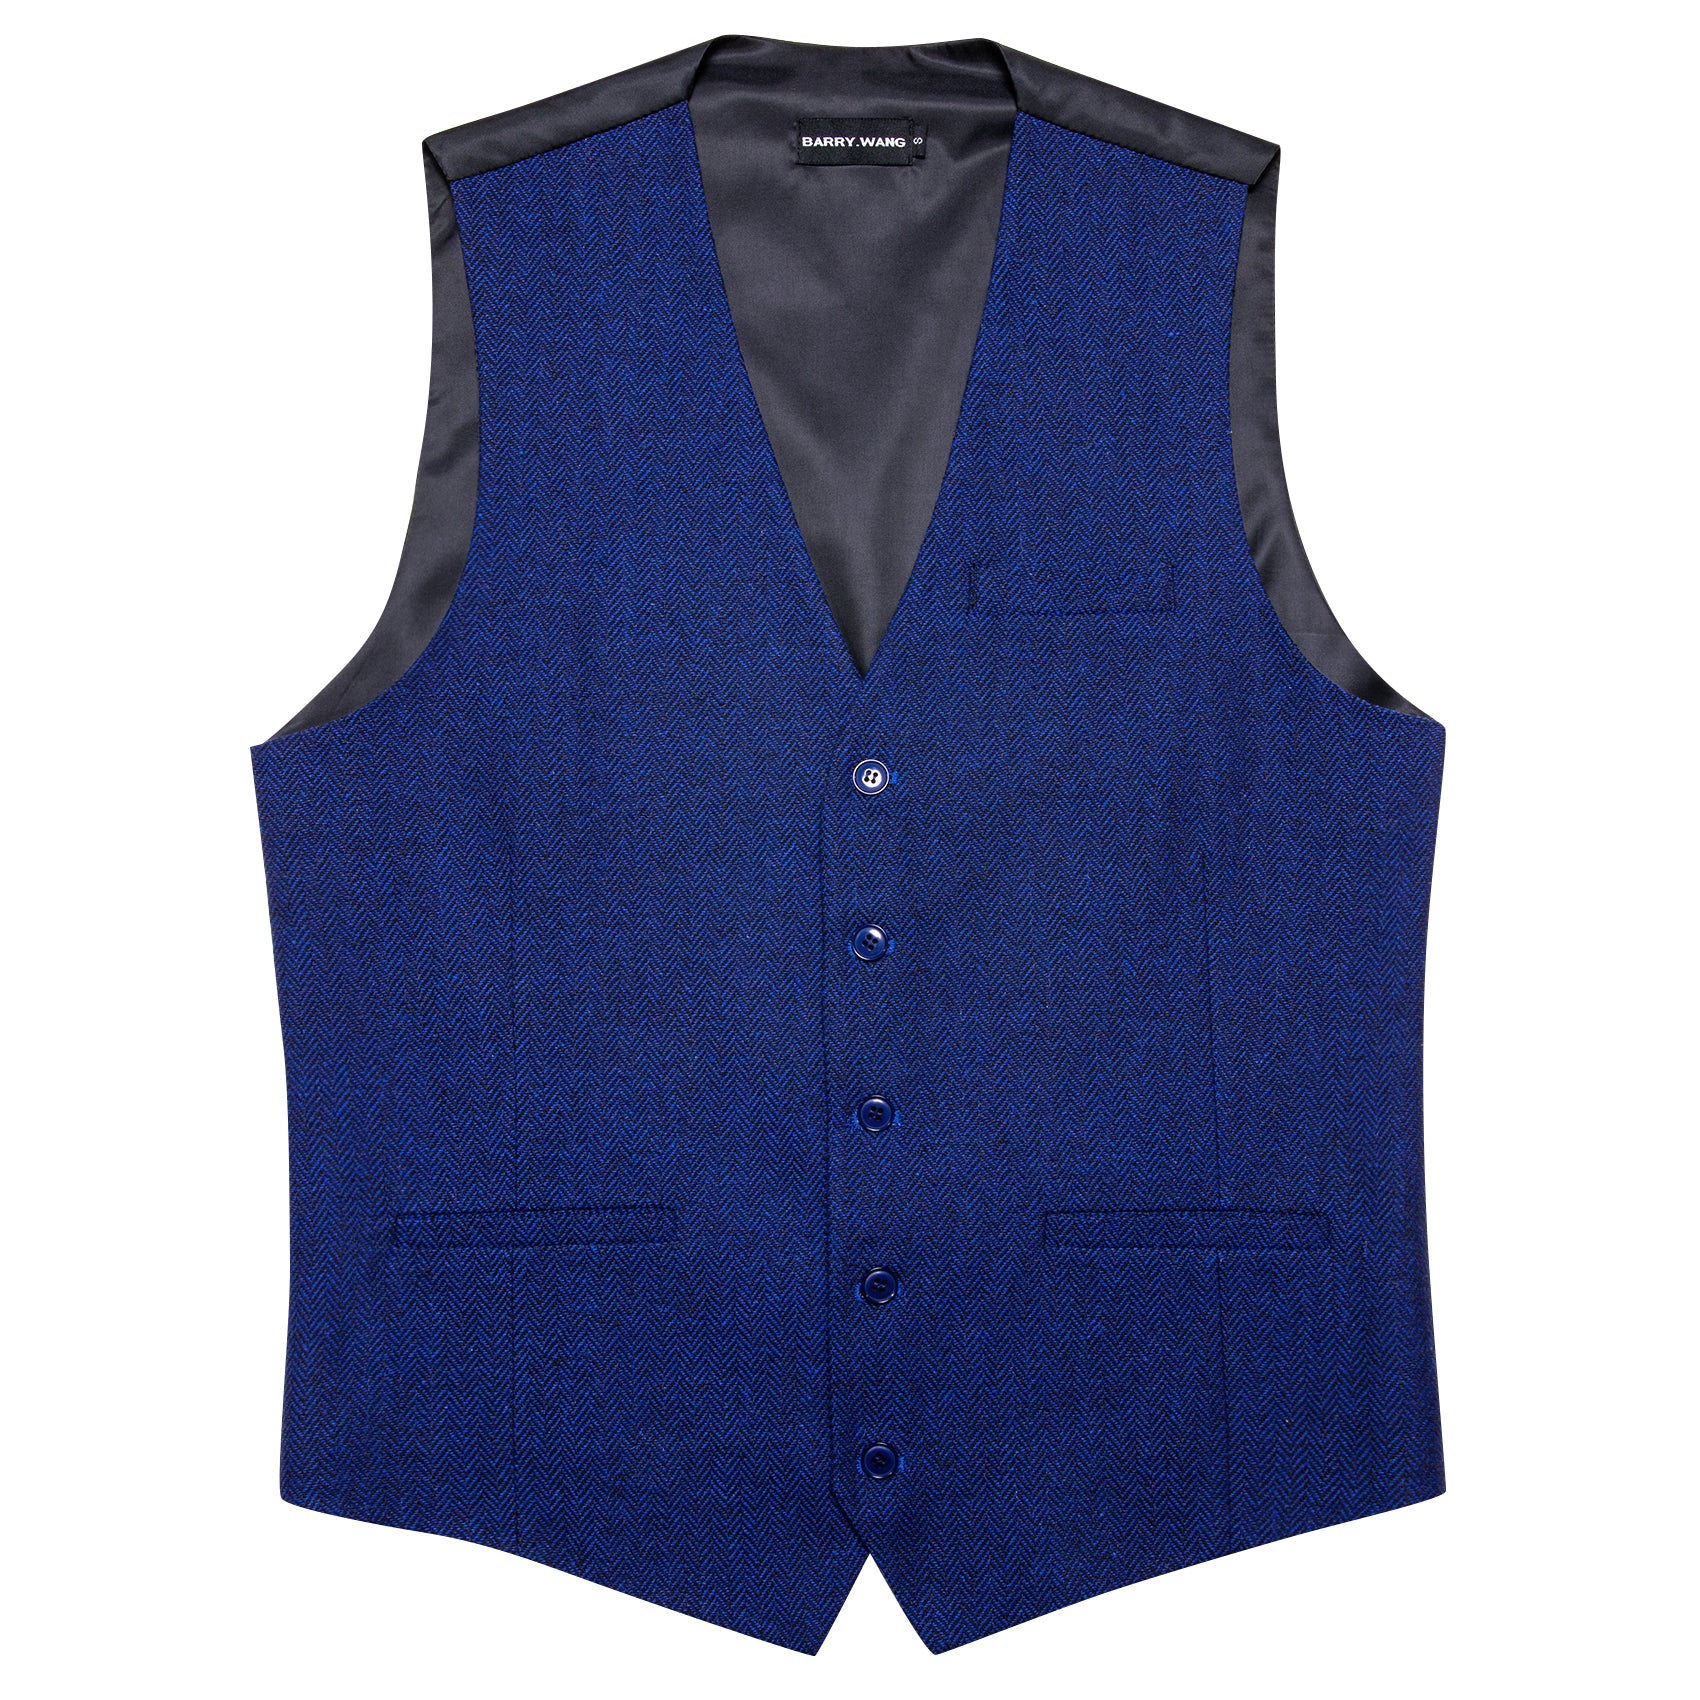 Barry.wang Classy Blue Solid Waistcoat Vest